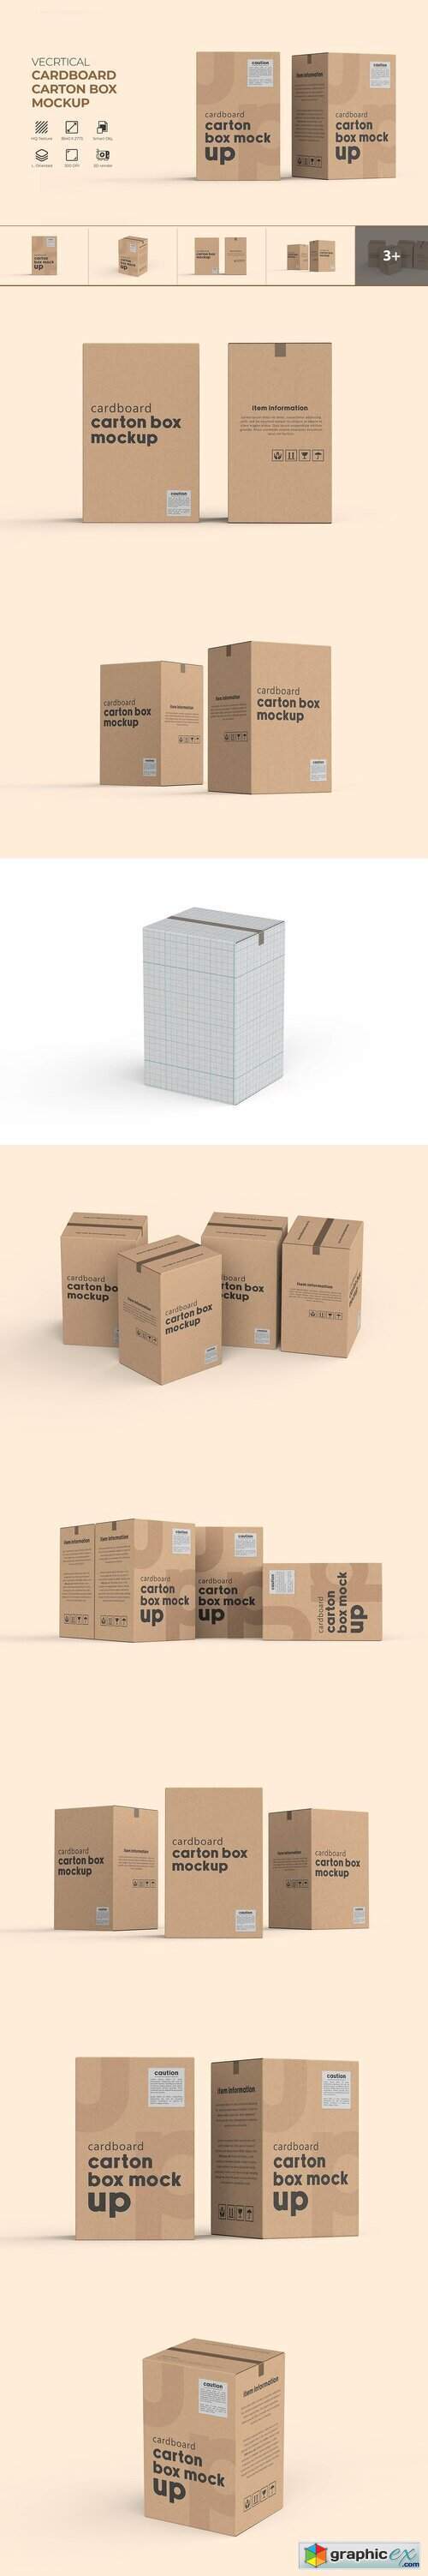 Vertical Cardboard Carton Box Mockup